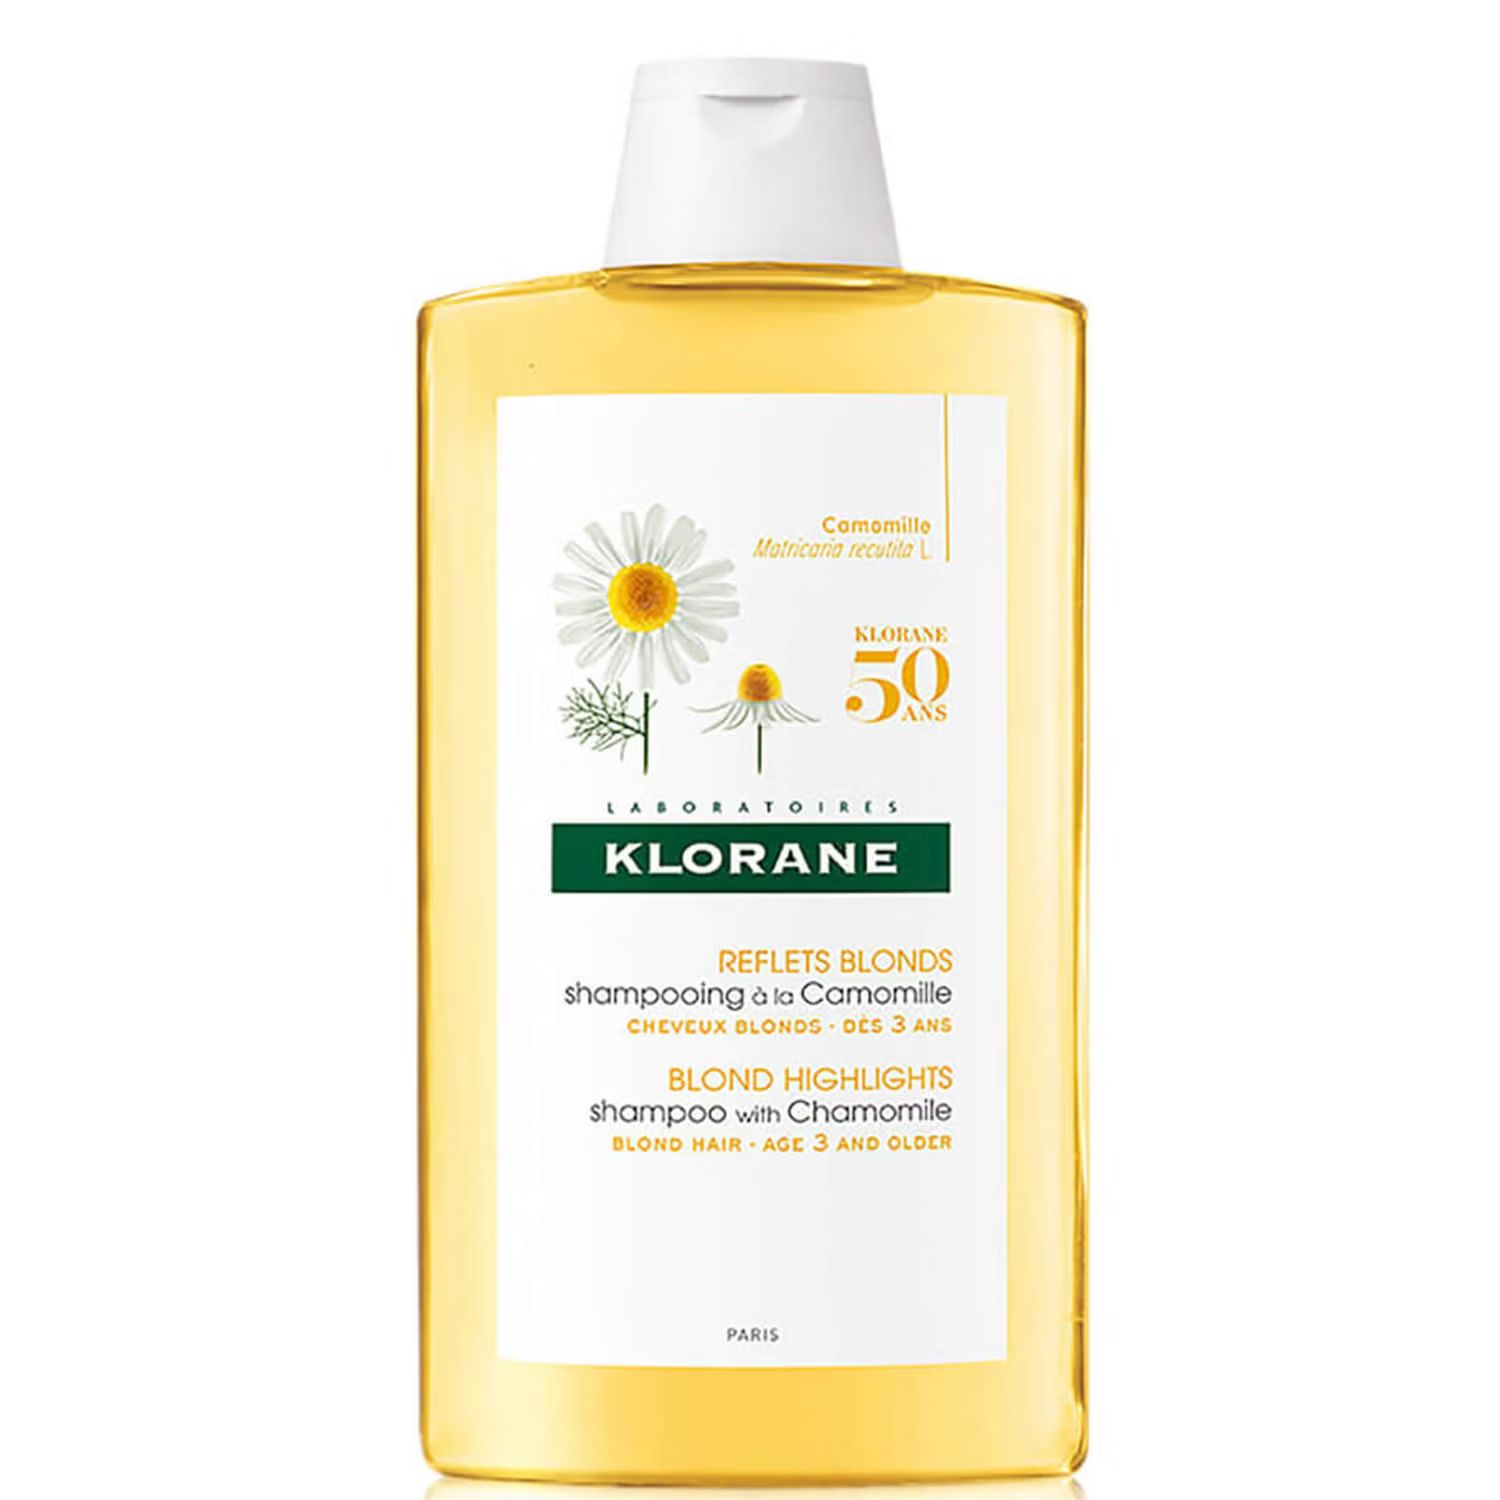 KLORANE Shampoo with Chamomile - Blond Hair (13.5 fl. oz.) | Dermstore (US)